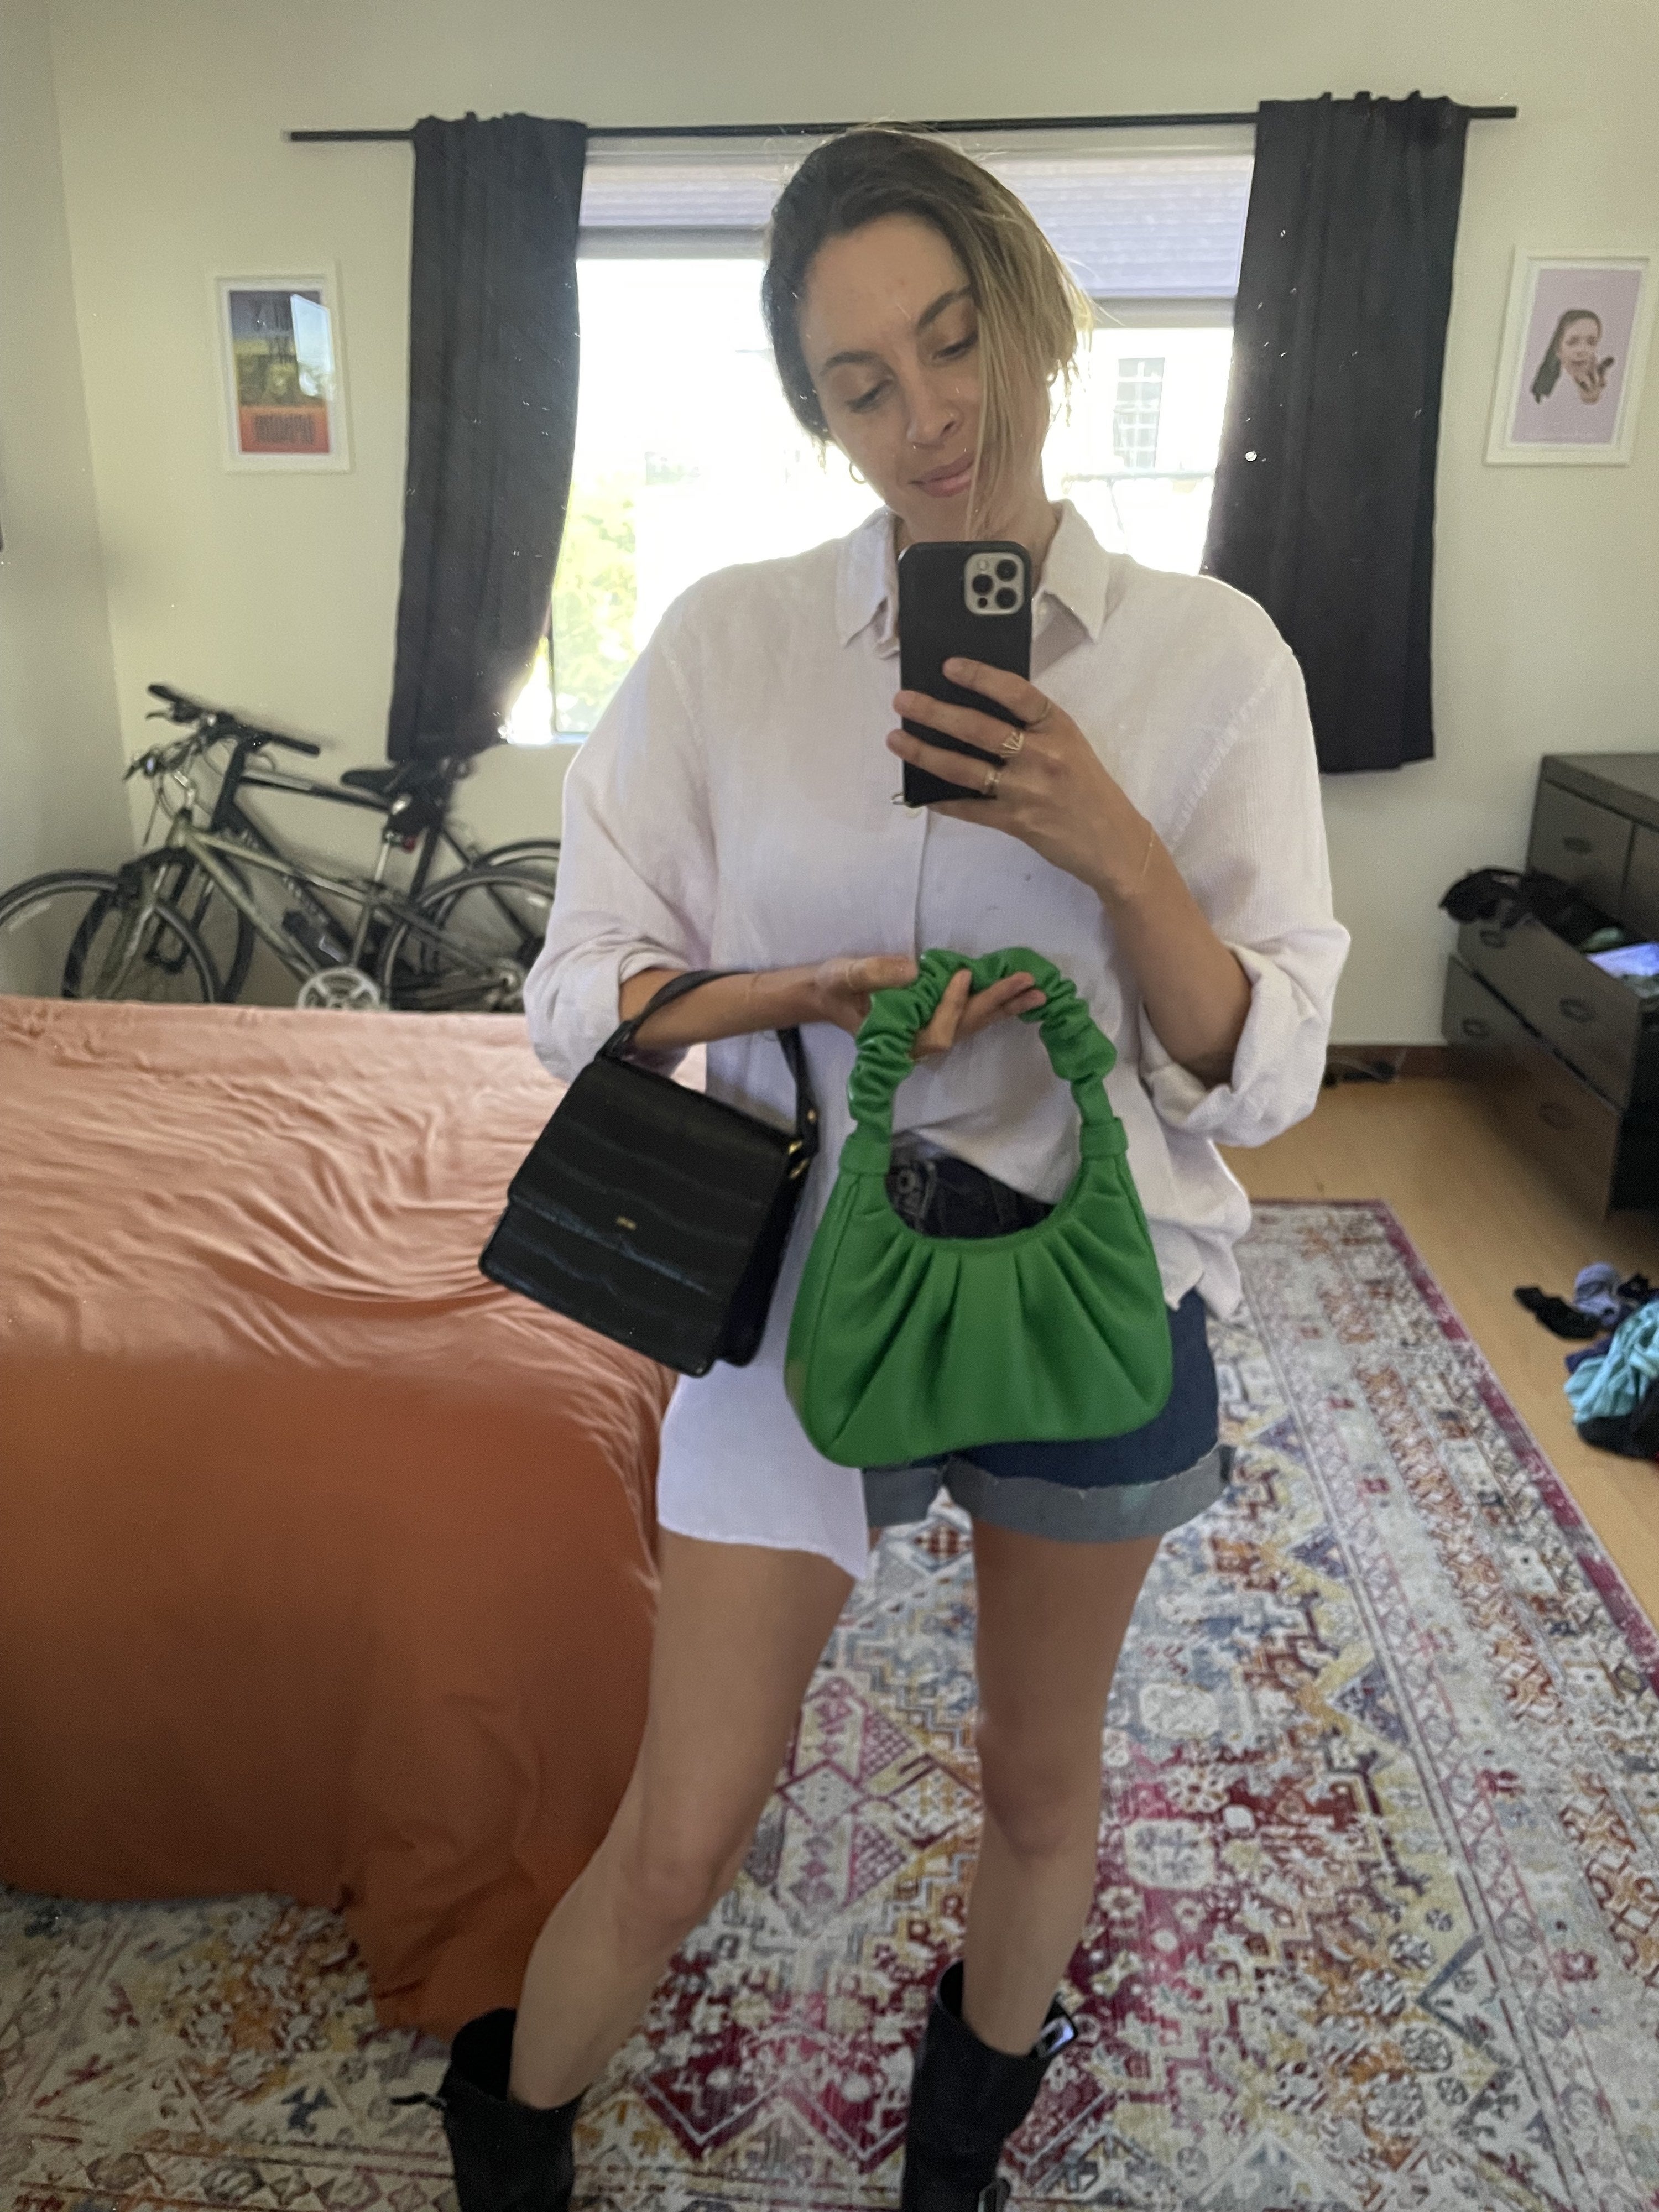 JW PEI Mini Flap Bag Review